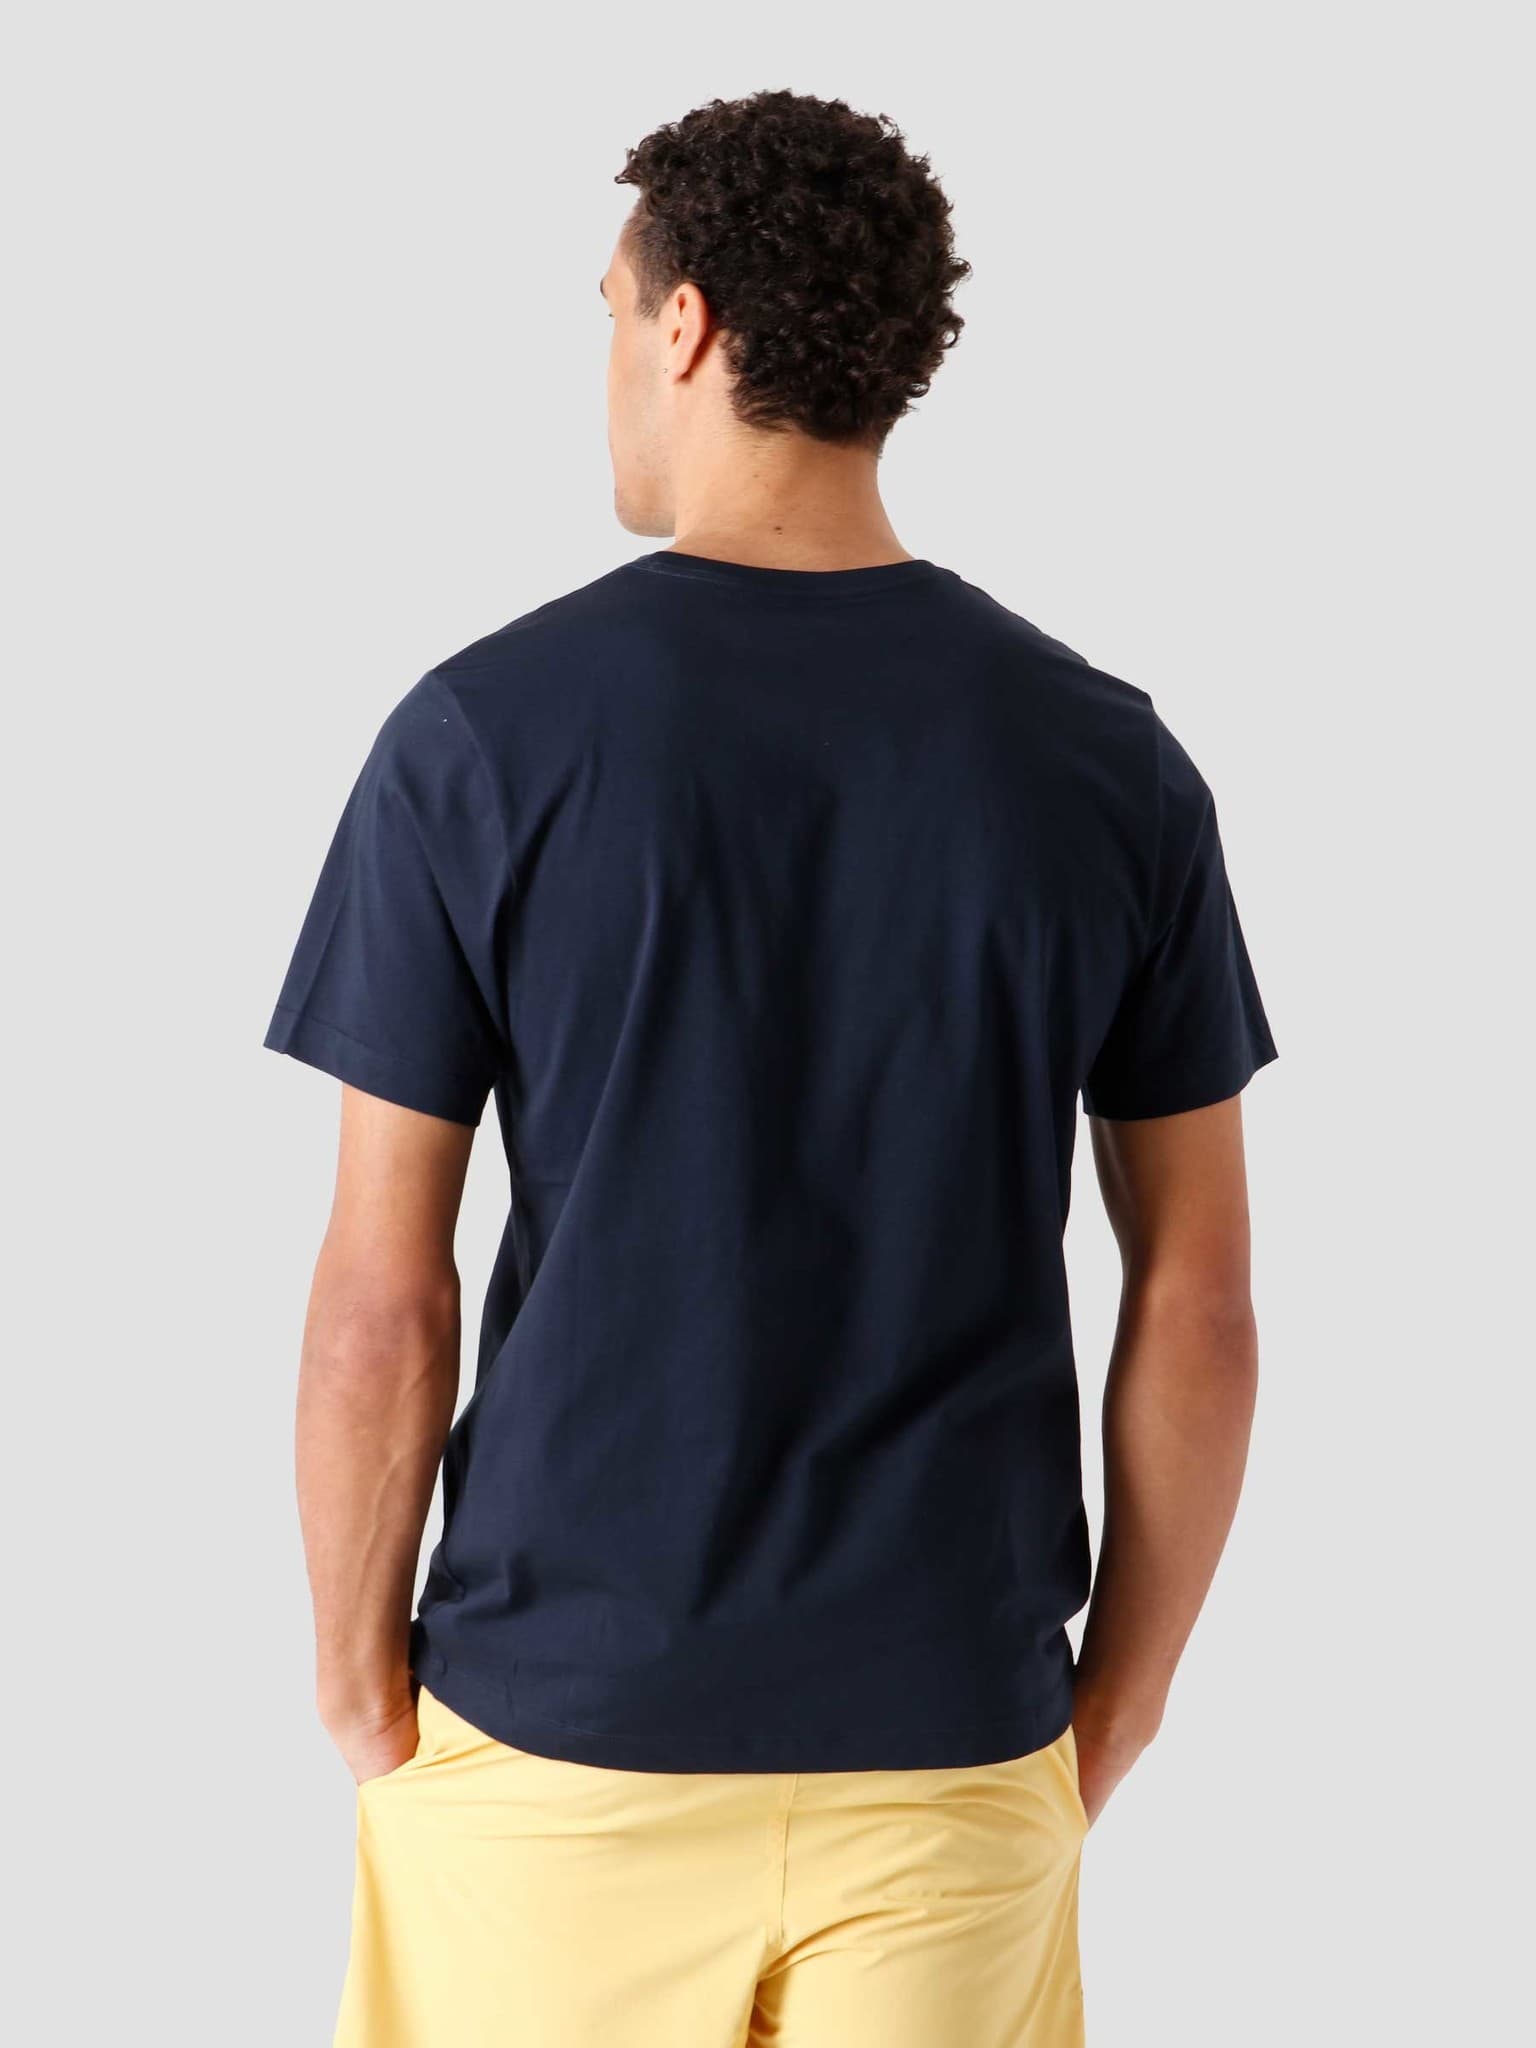 Arc'word T-Shirt Kingfisher 24013